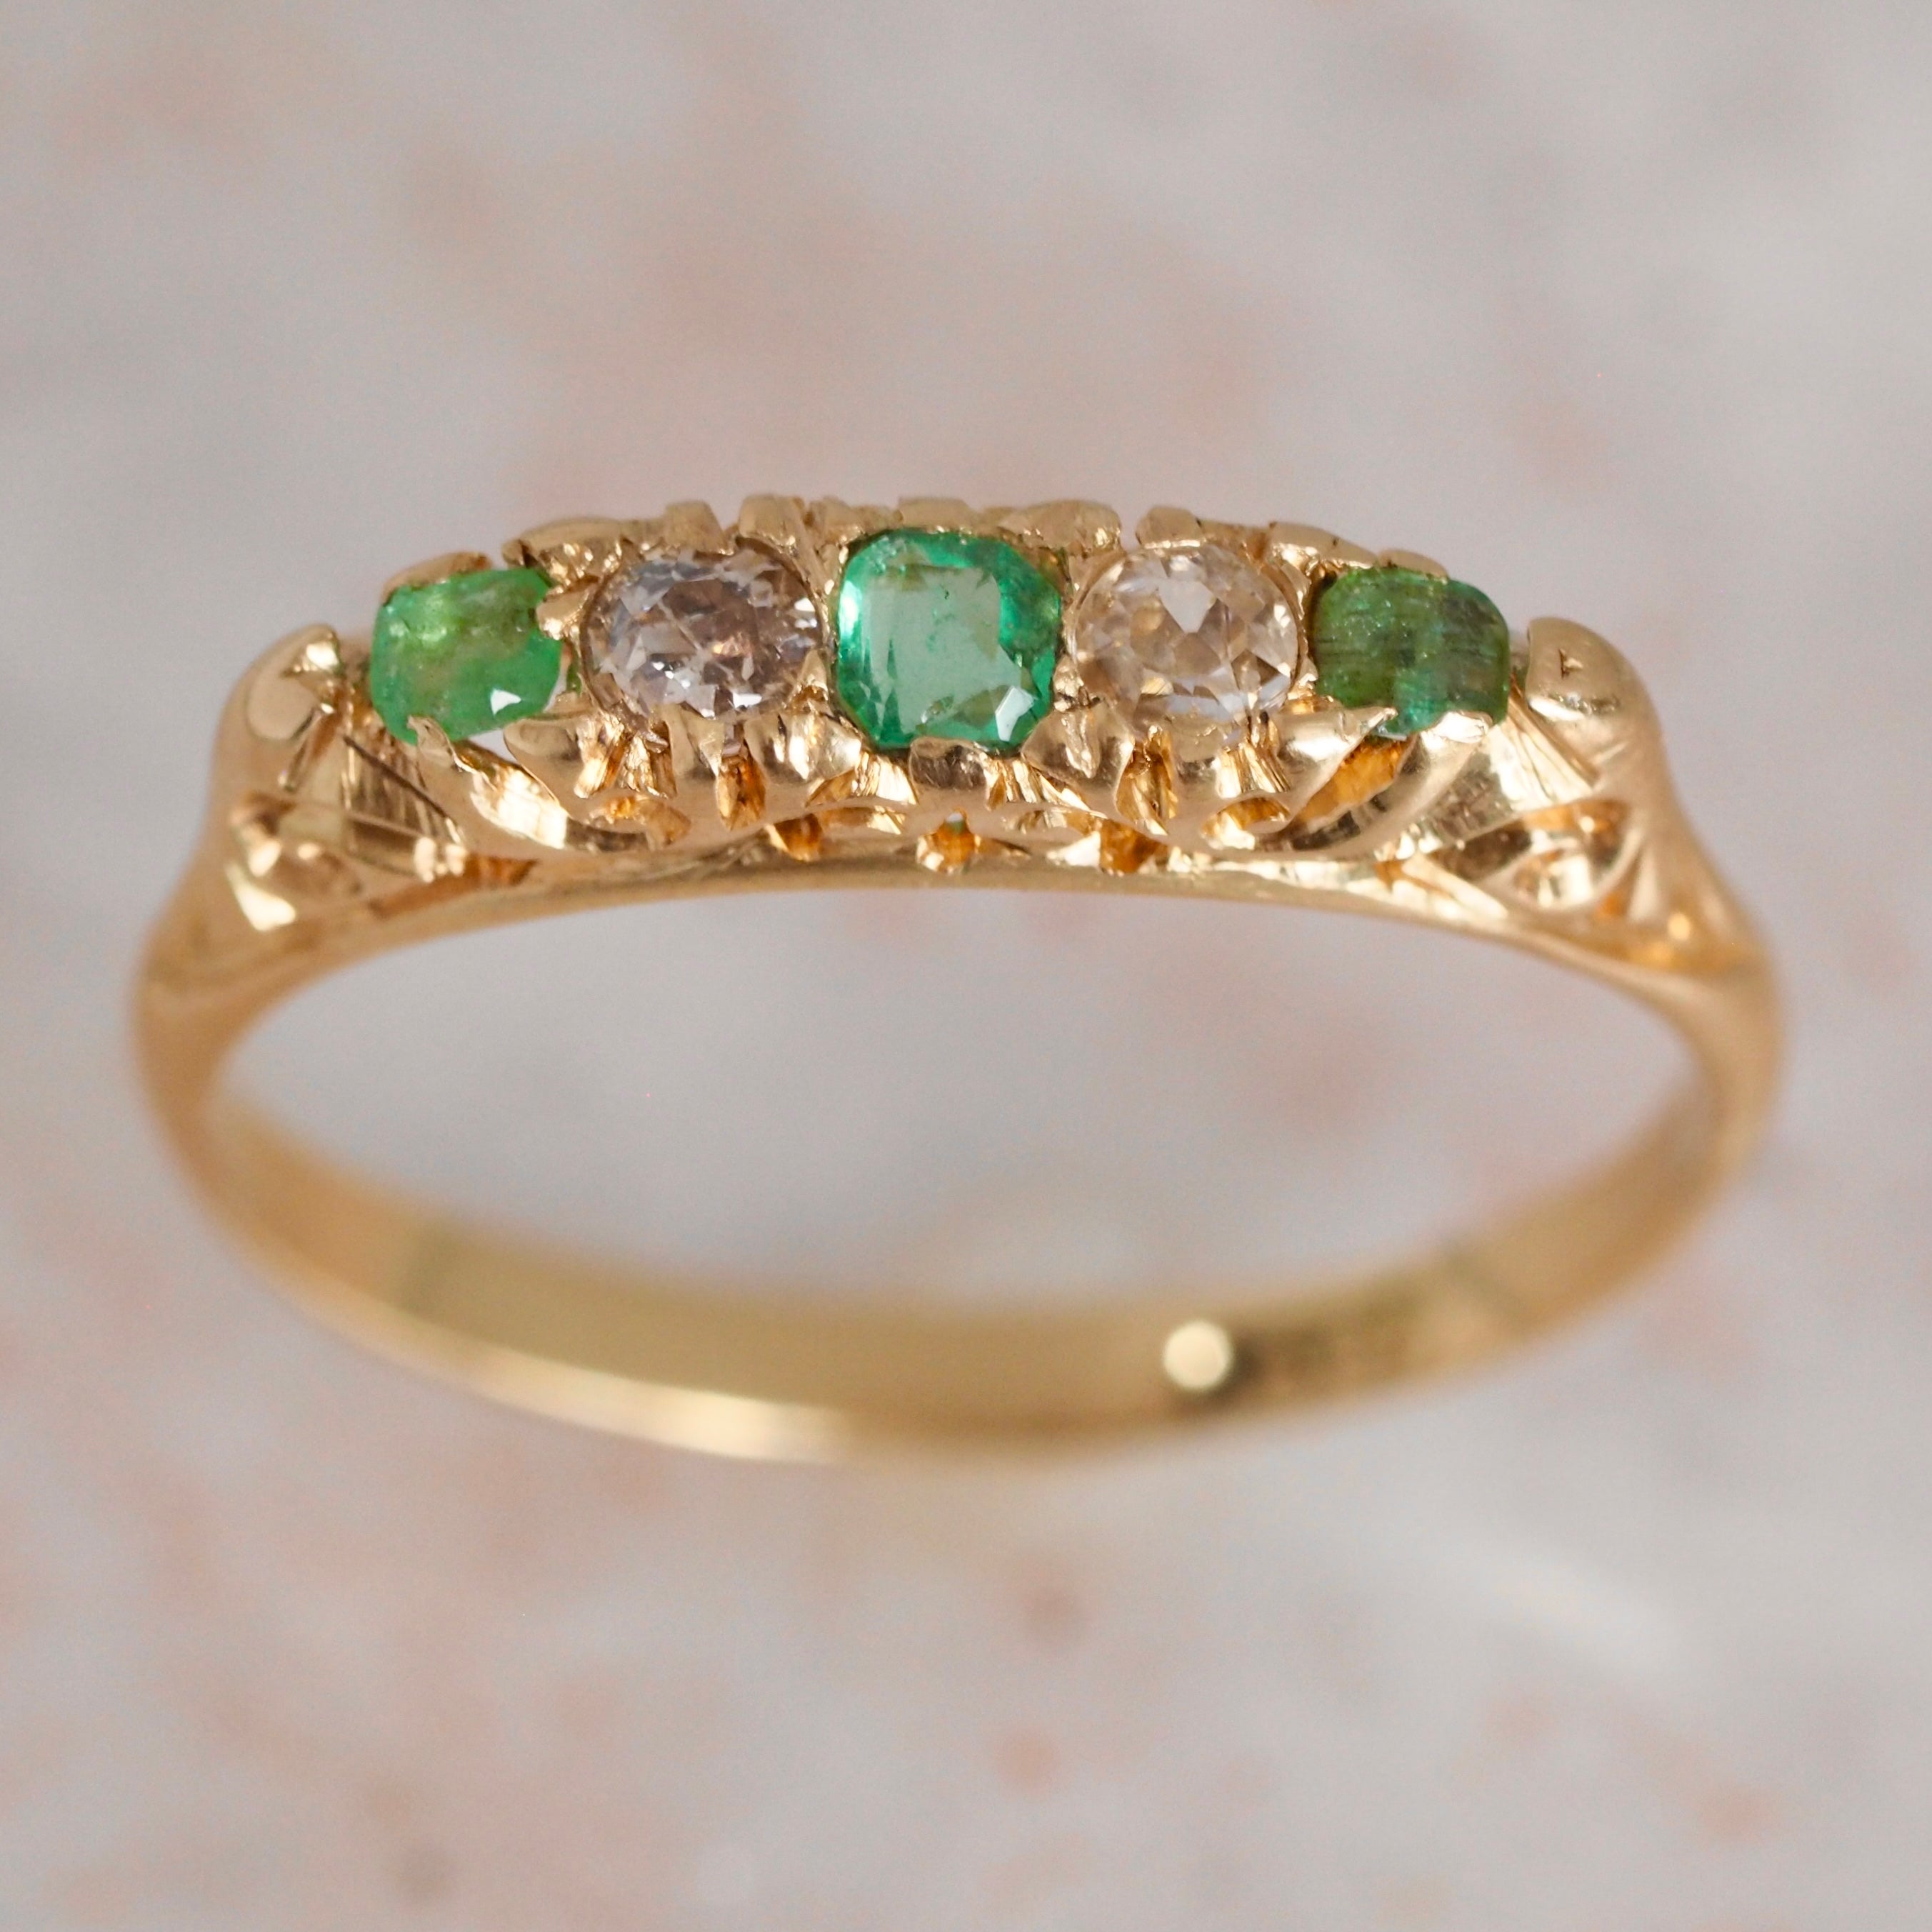 Antique English Art Nouveau 18k Gold Five Stone Emerald and Diamond Ring